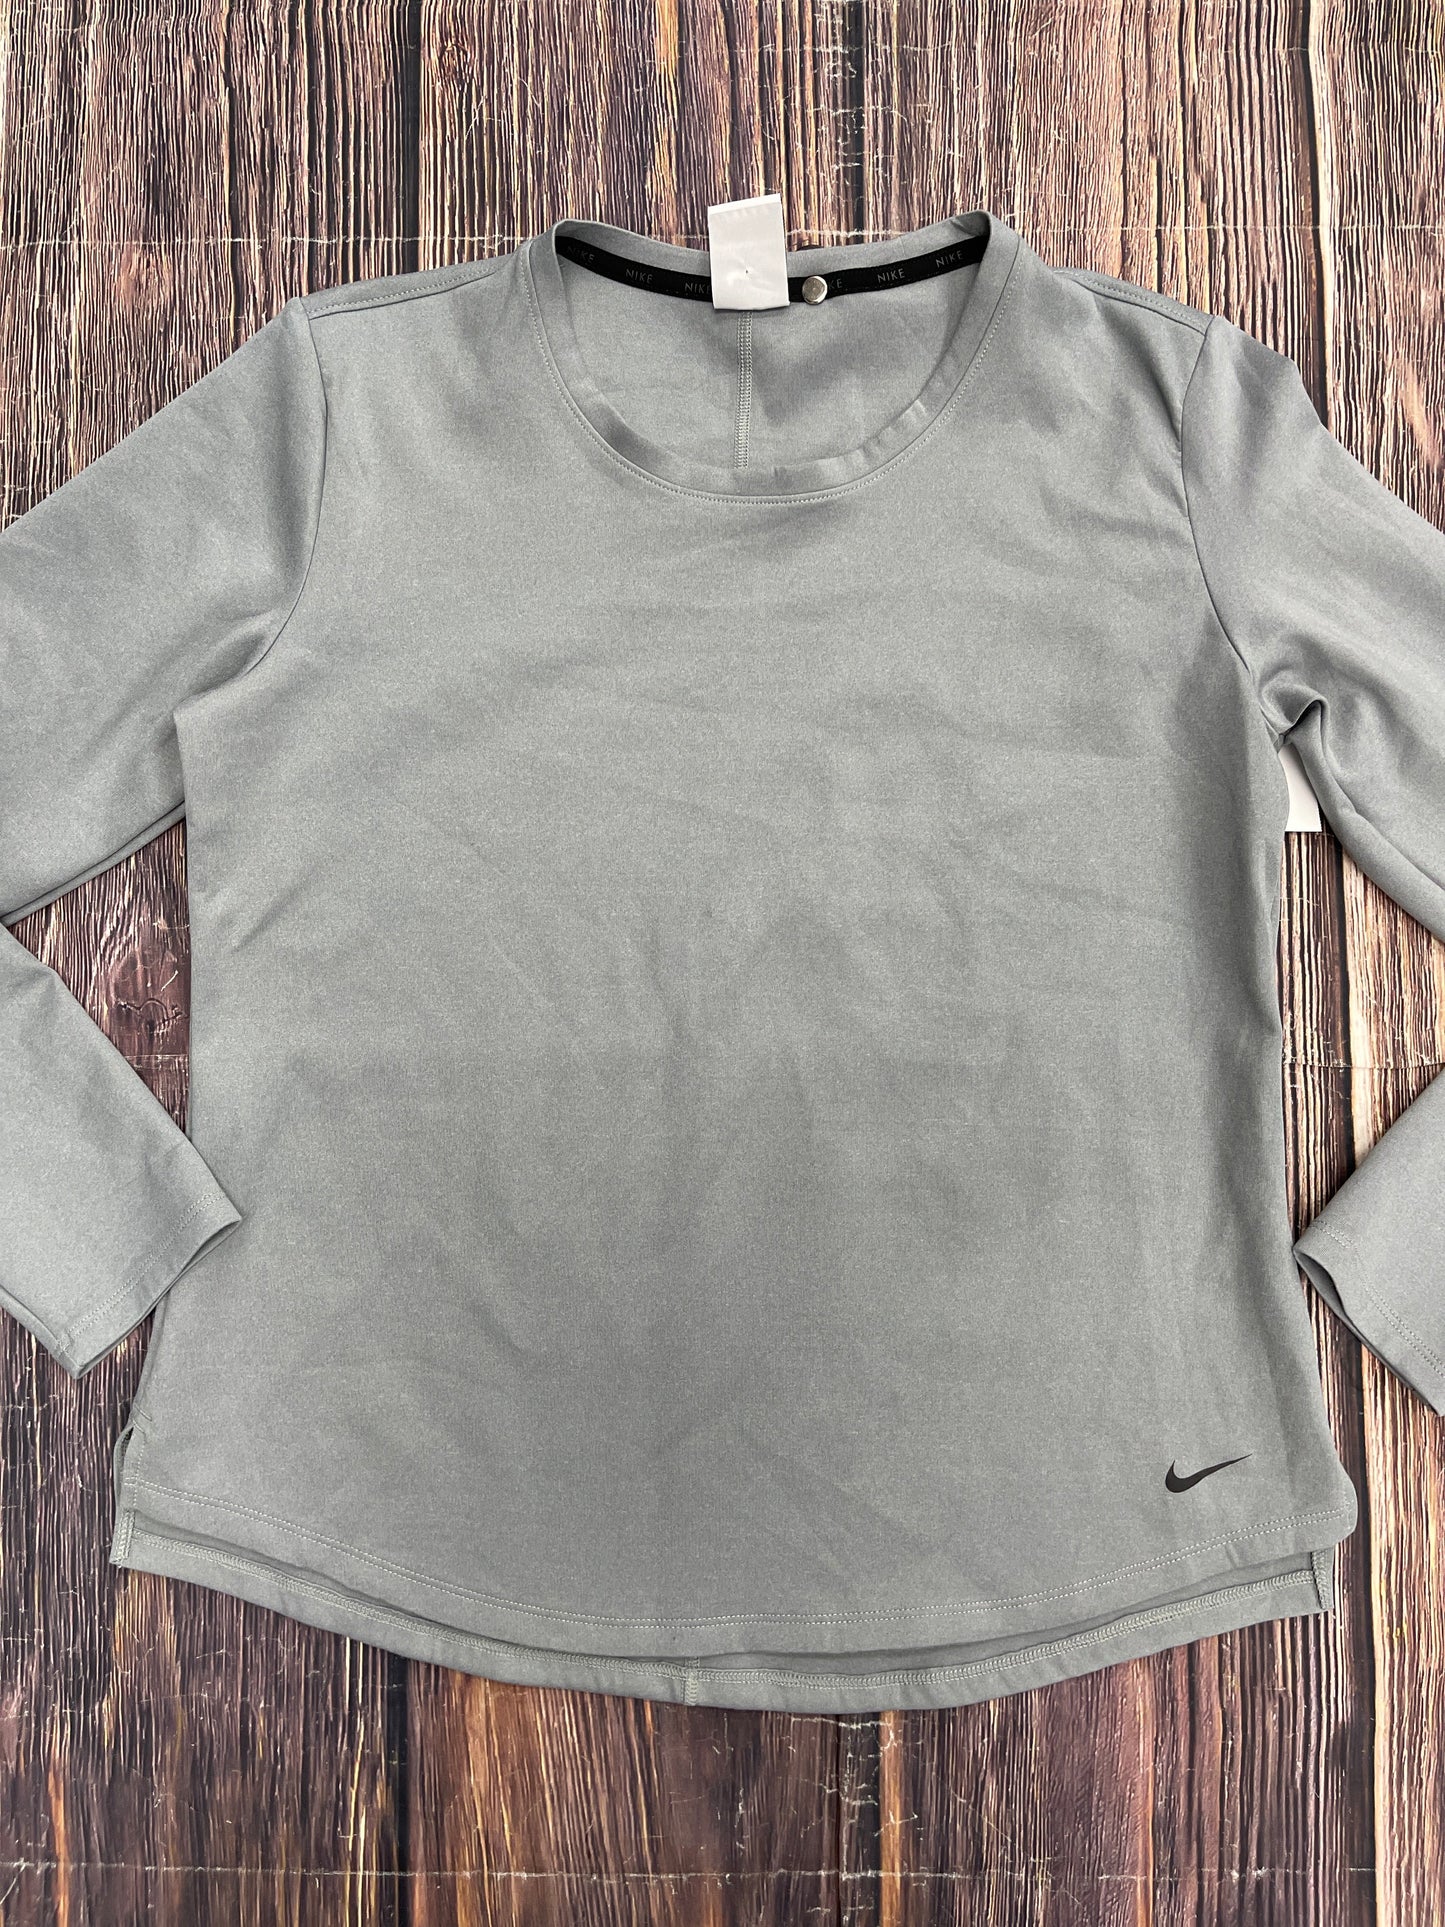 Grey Athletic Top Long Sleeve Crewneck Nike, Size M